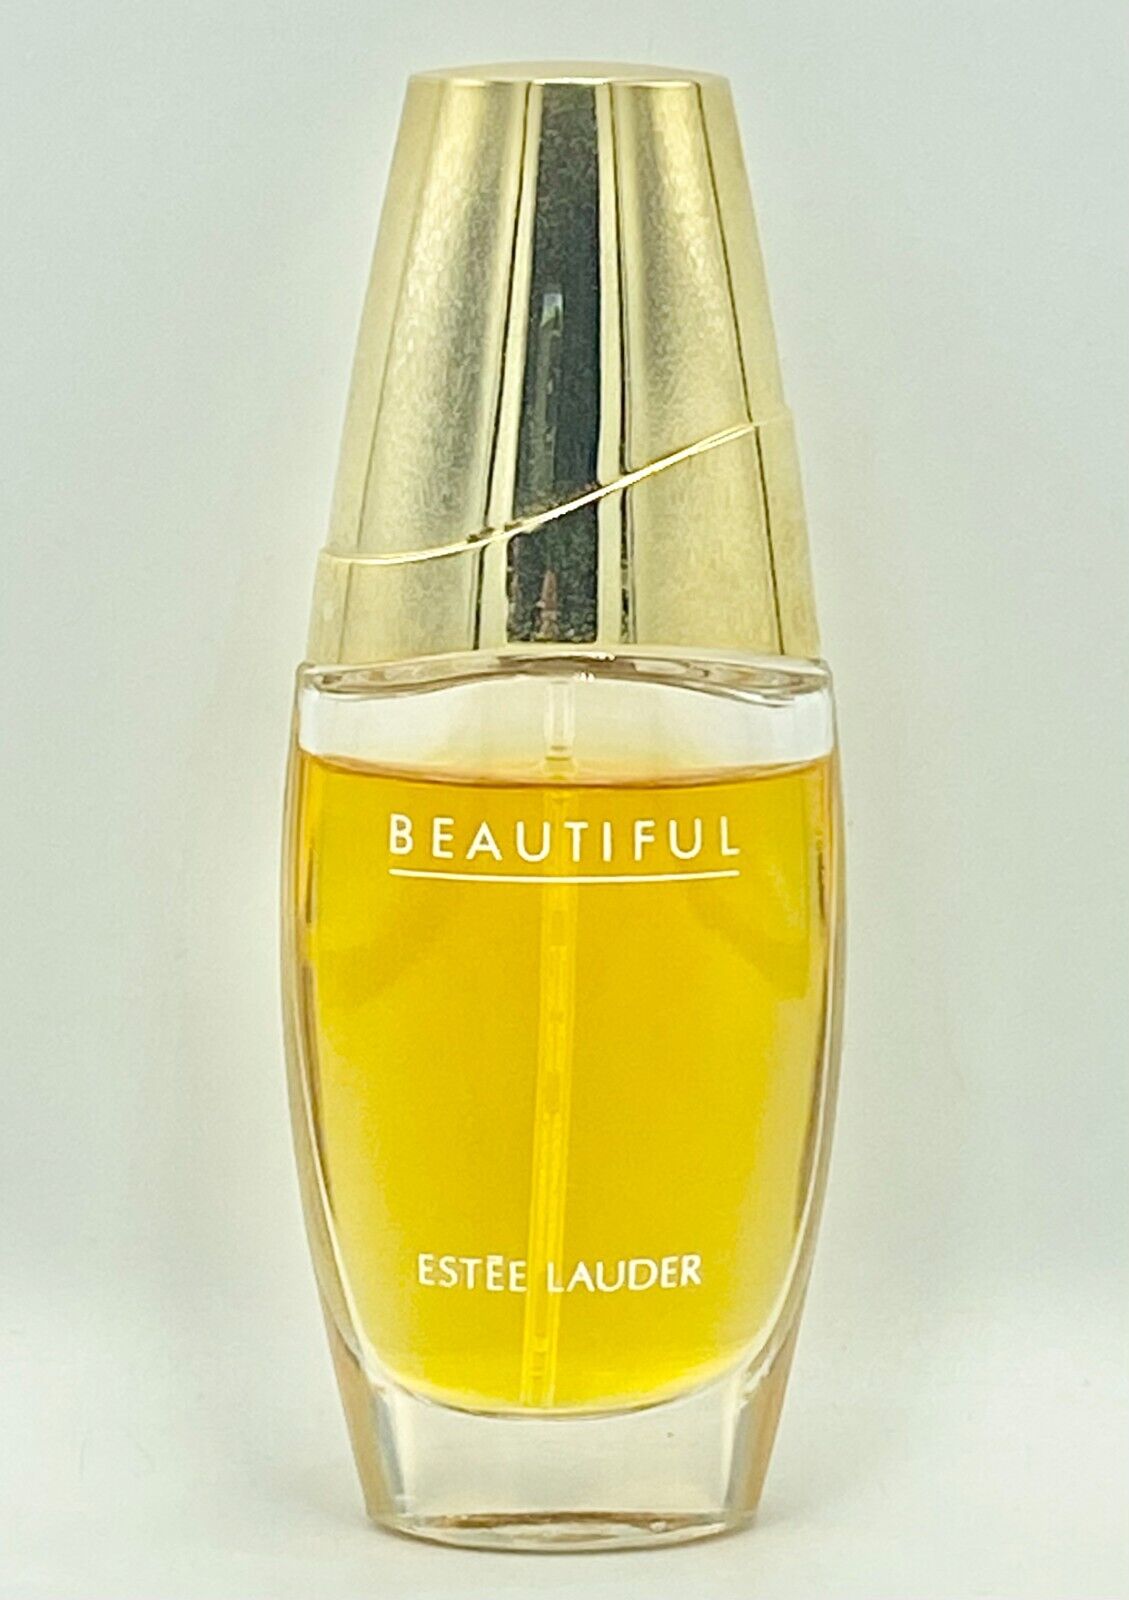 BEAUTIFUL by ESTEE LAUDER 1.7 FL oz / 50 ML Eau De Parfum Spray 90% Full